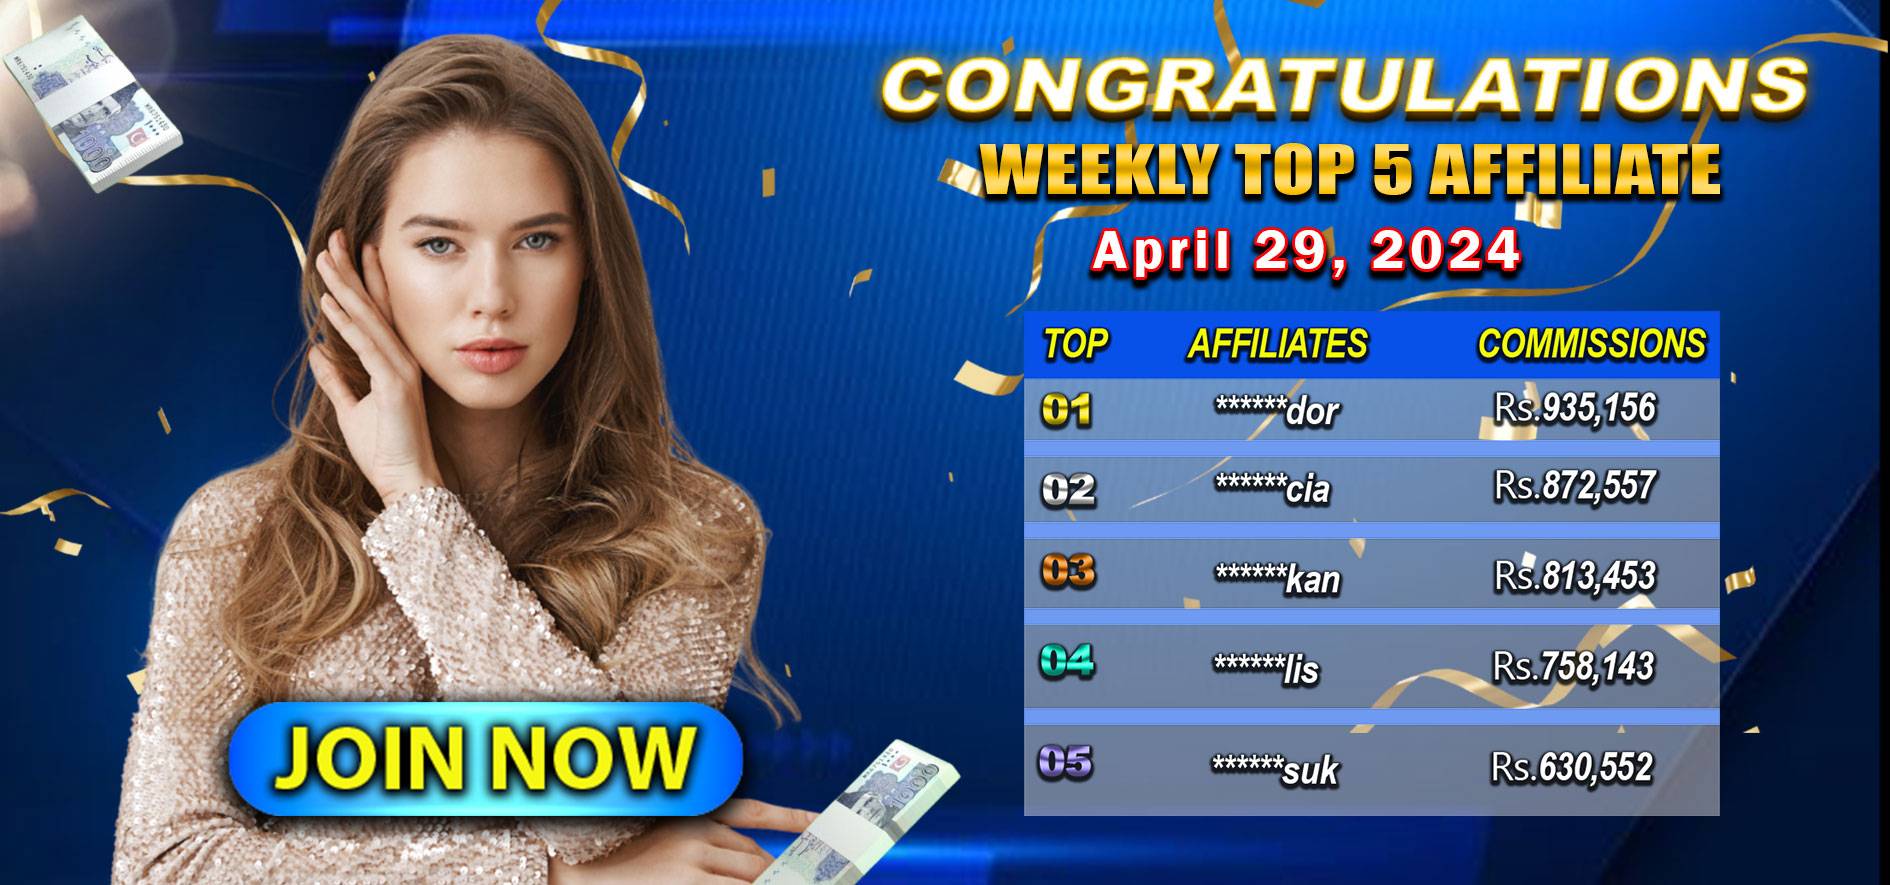 weekly-top-5-affiliate-april-29-2024-WEB